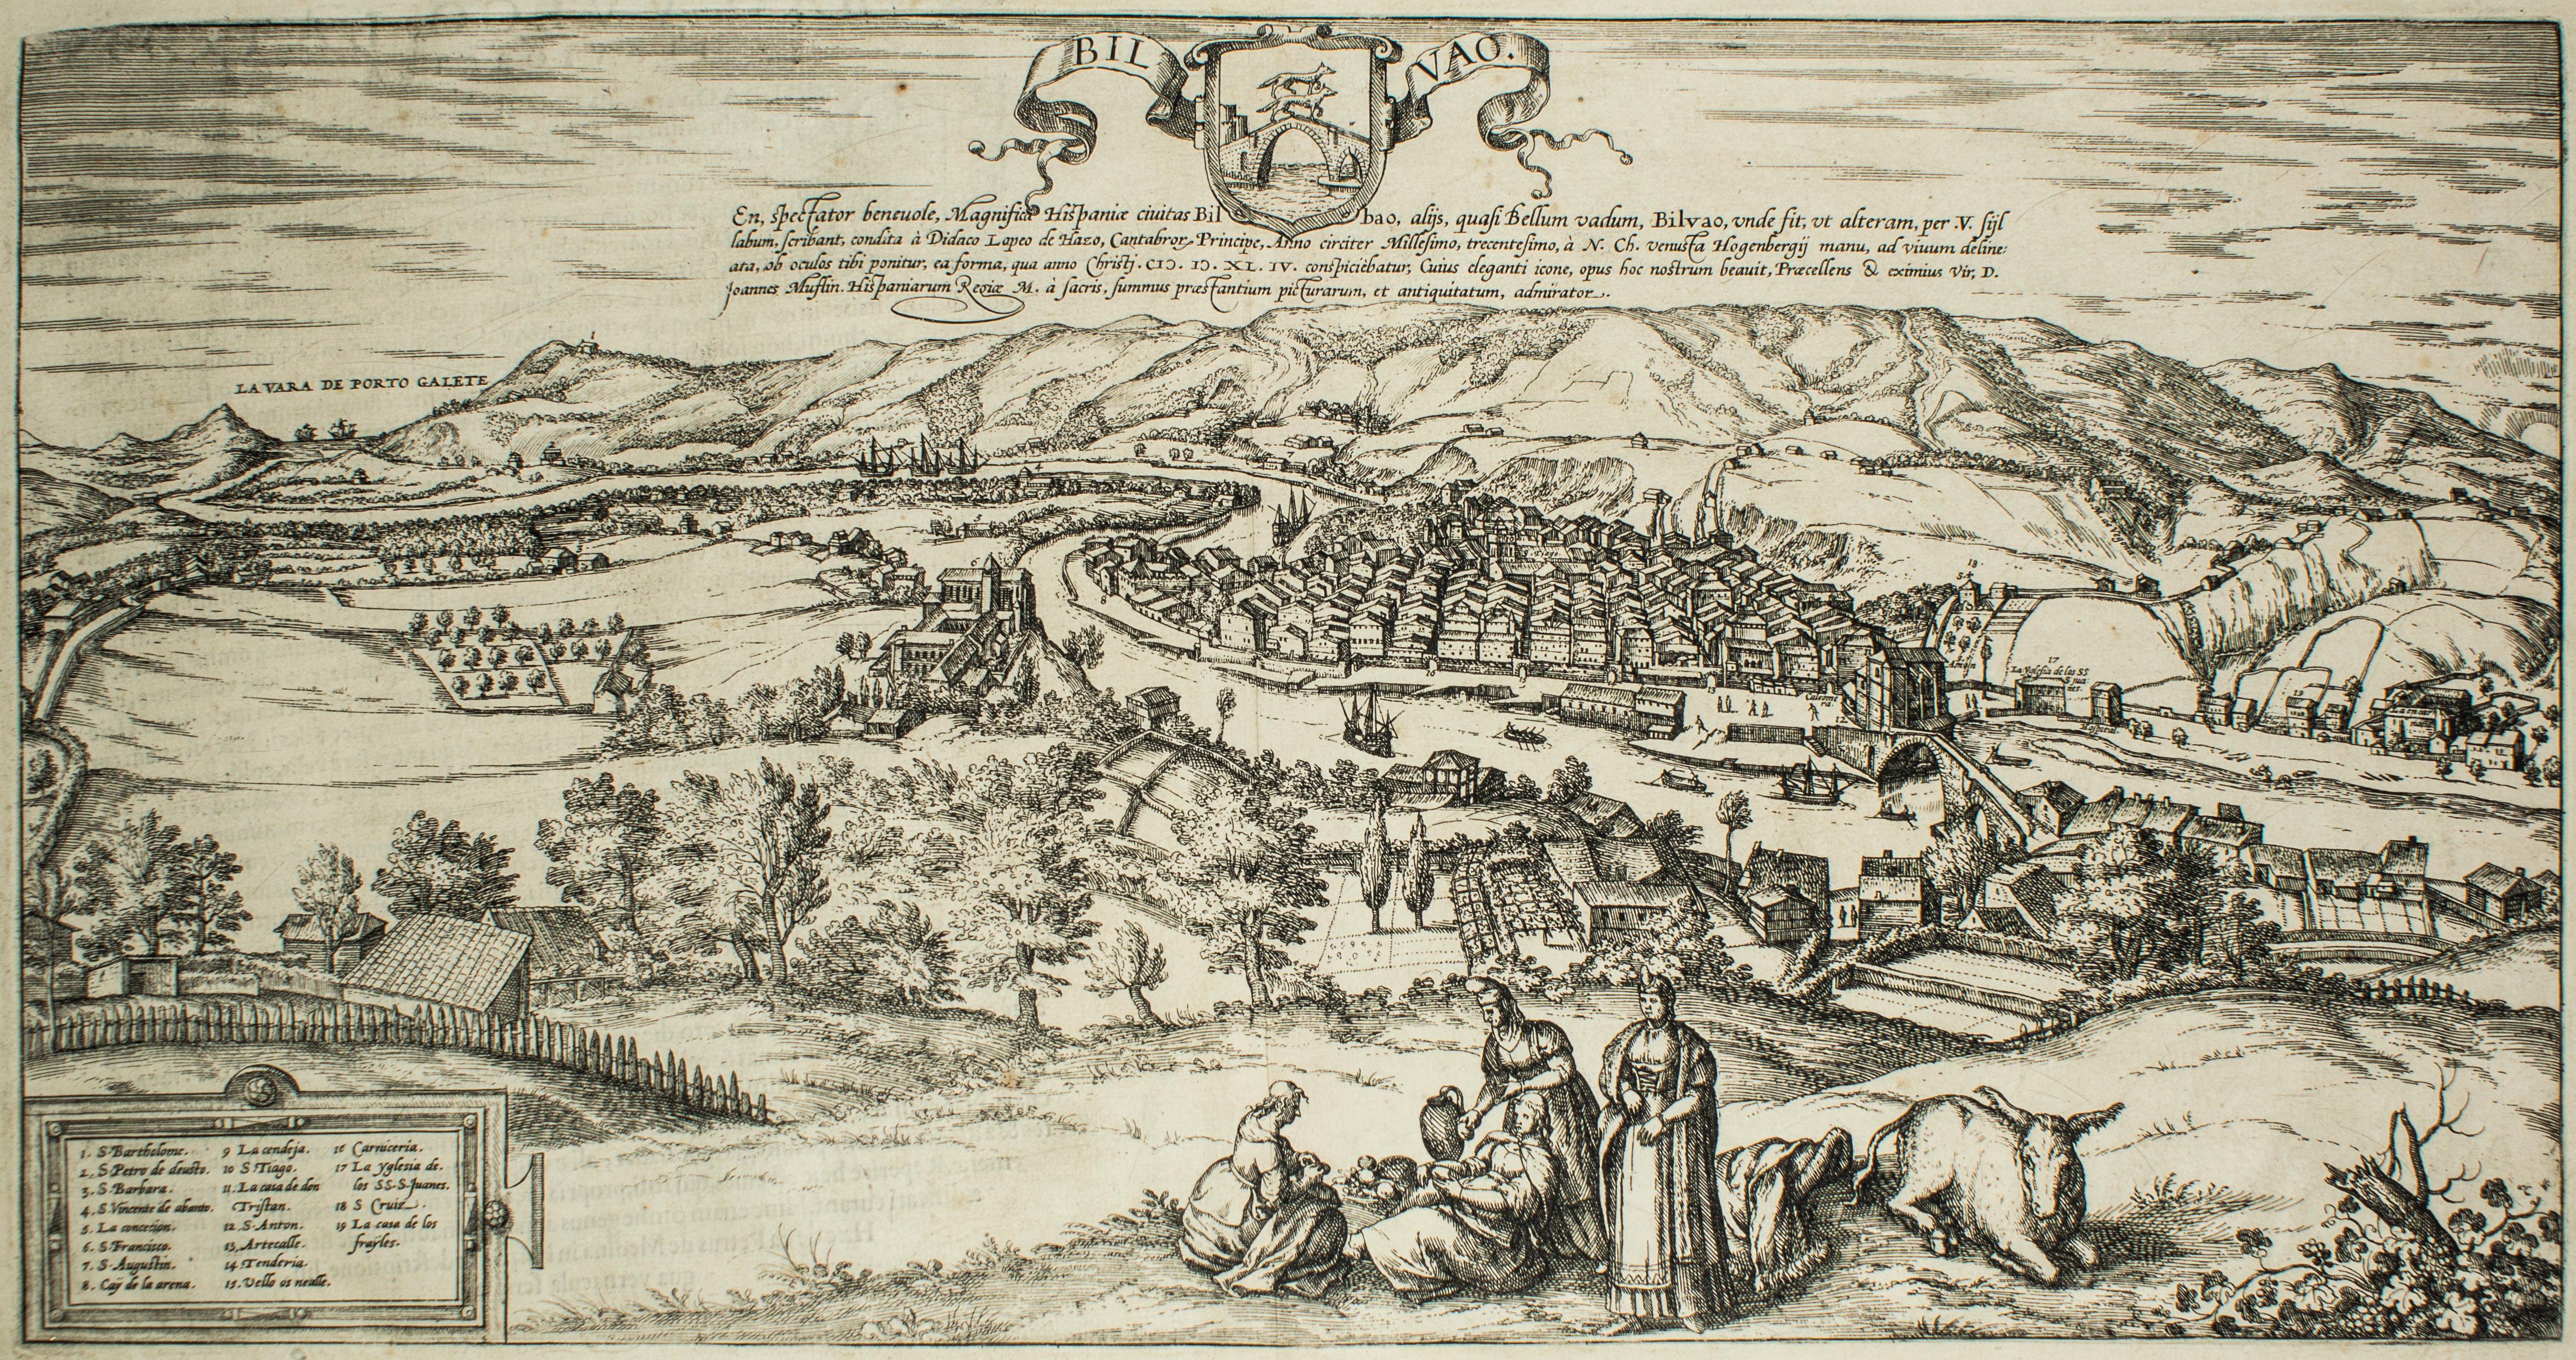 Bilbao, Antique Map from "Civitates Orbis Terrarum" - by F.Hogenberg - 1572-1617